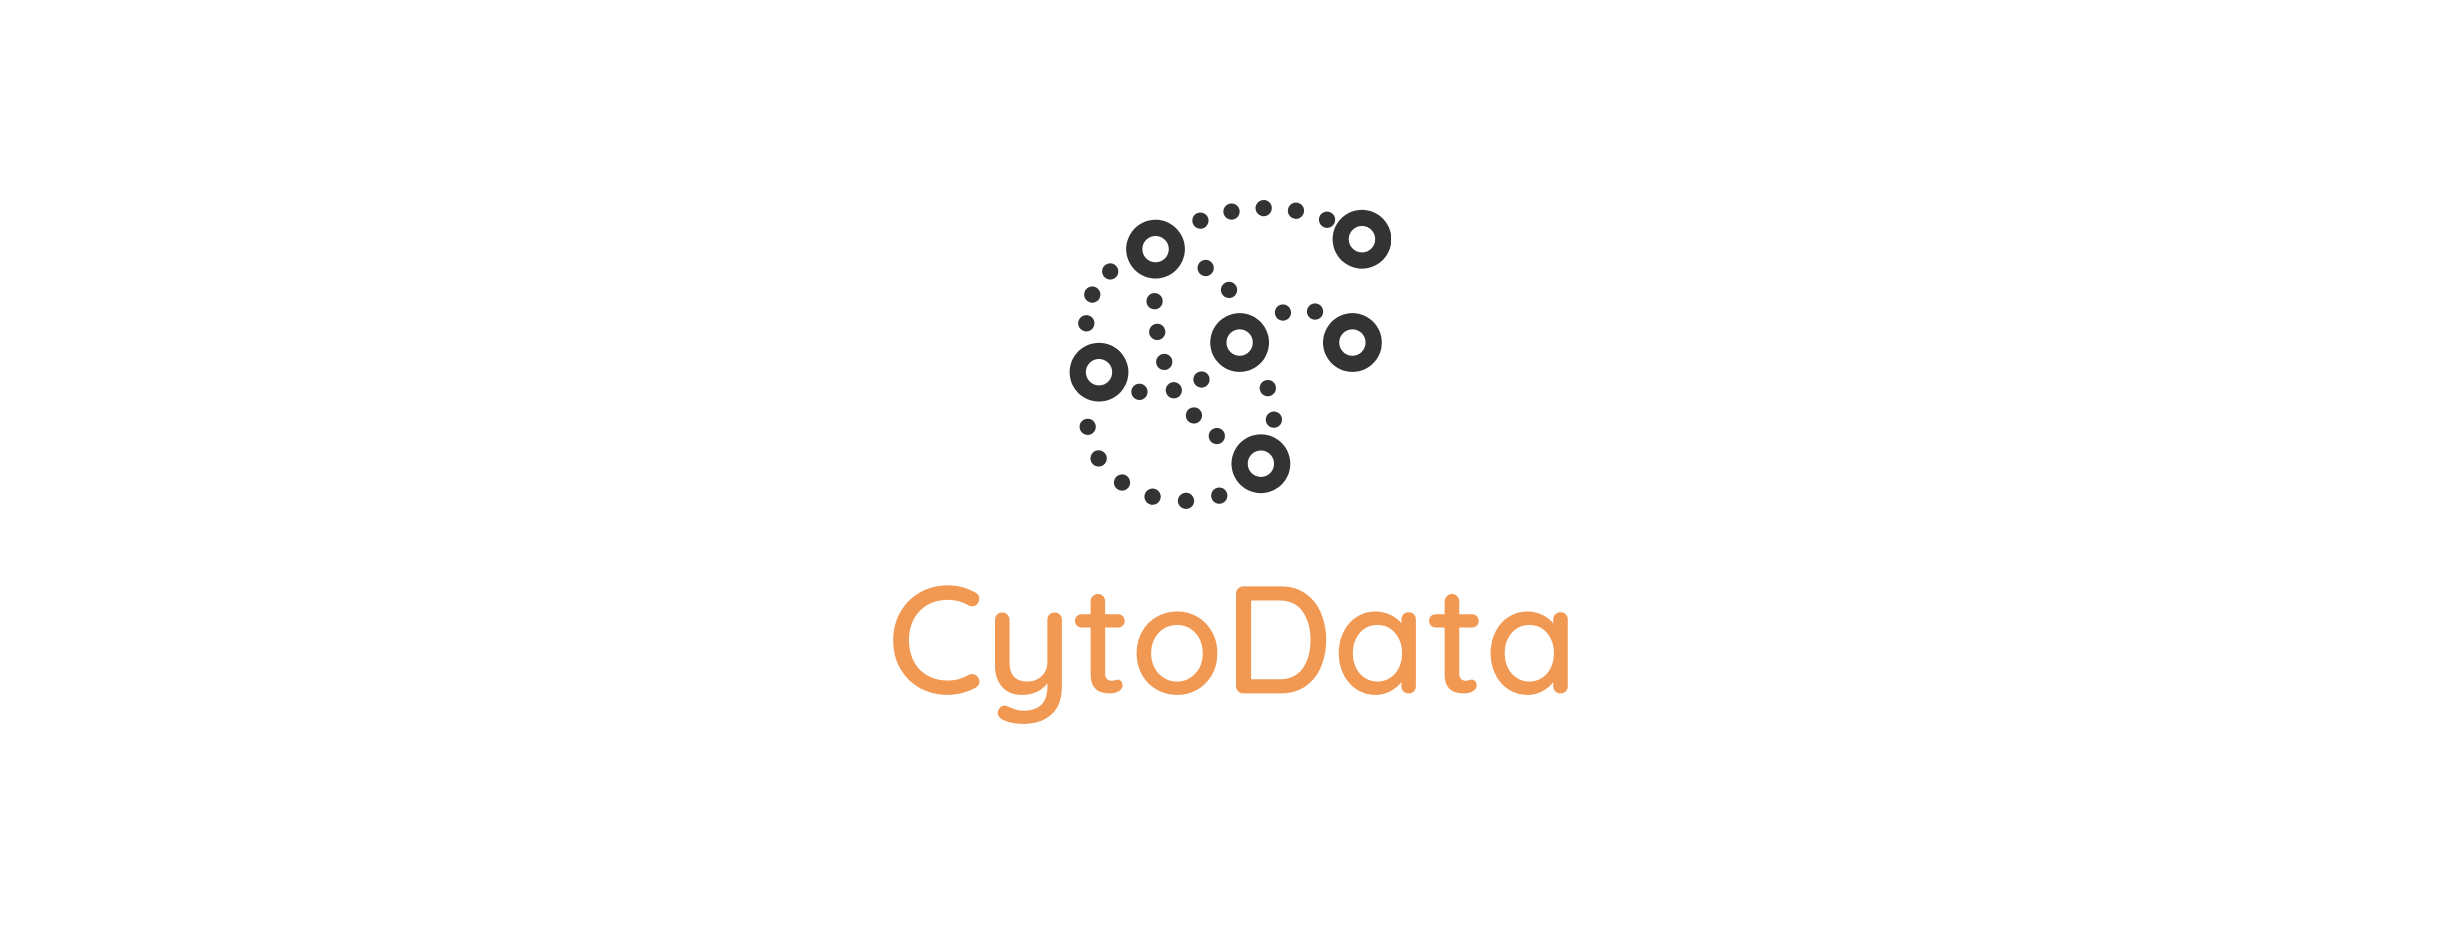 CytoData banner